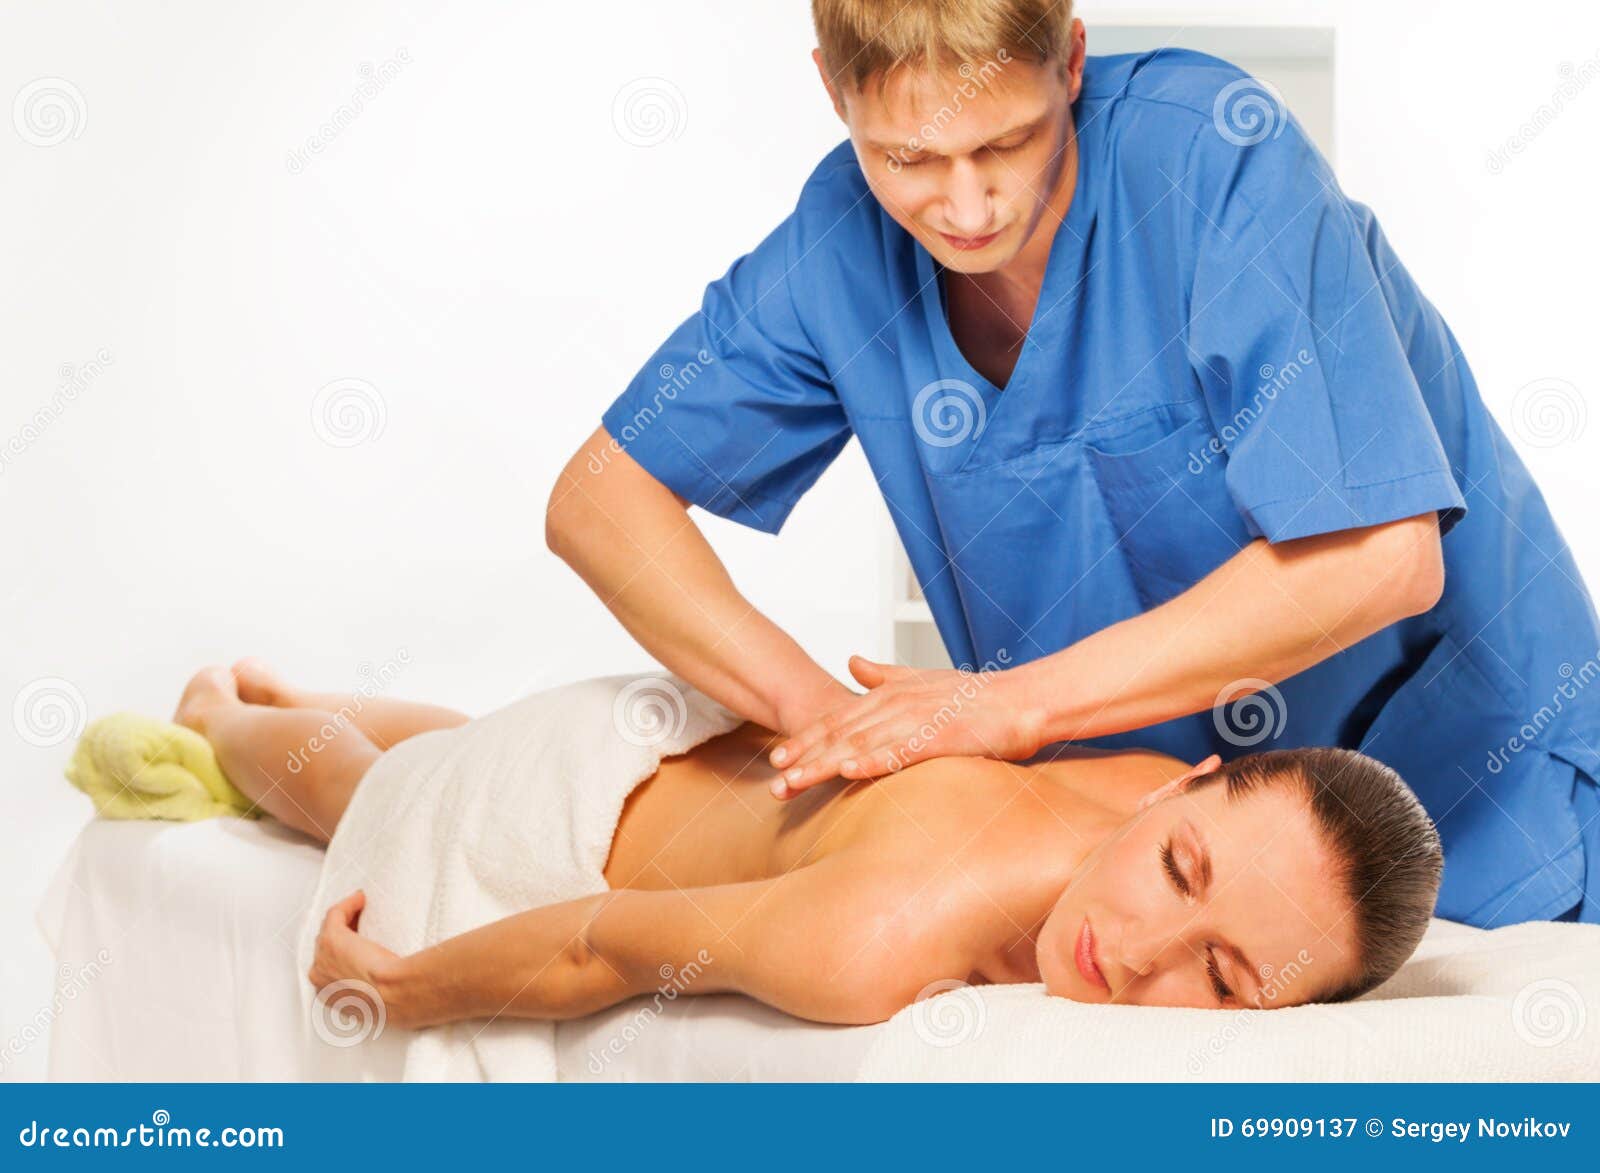 masseur doing massage on woman body in spa salon